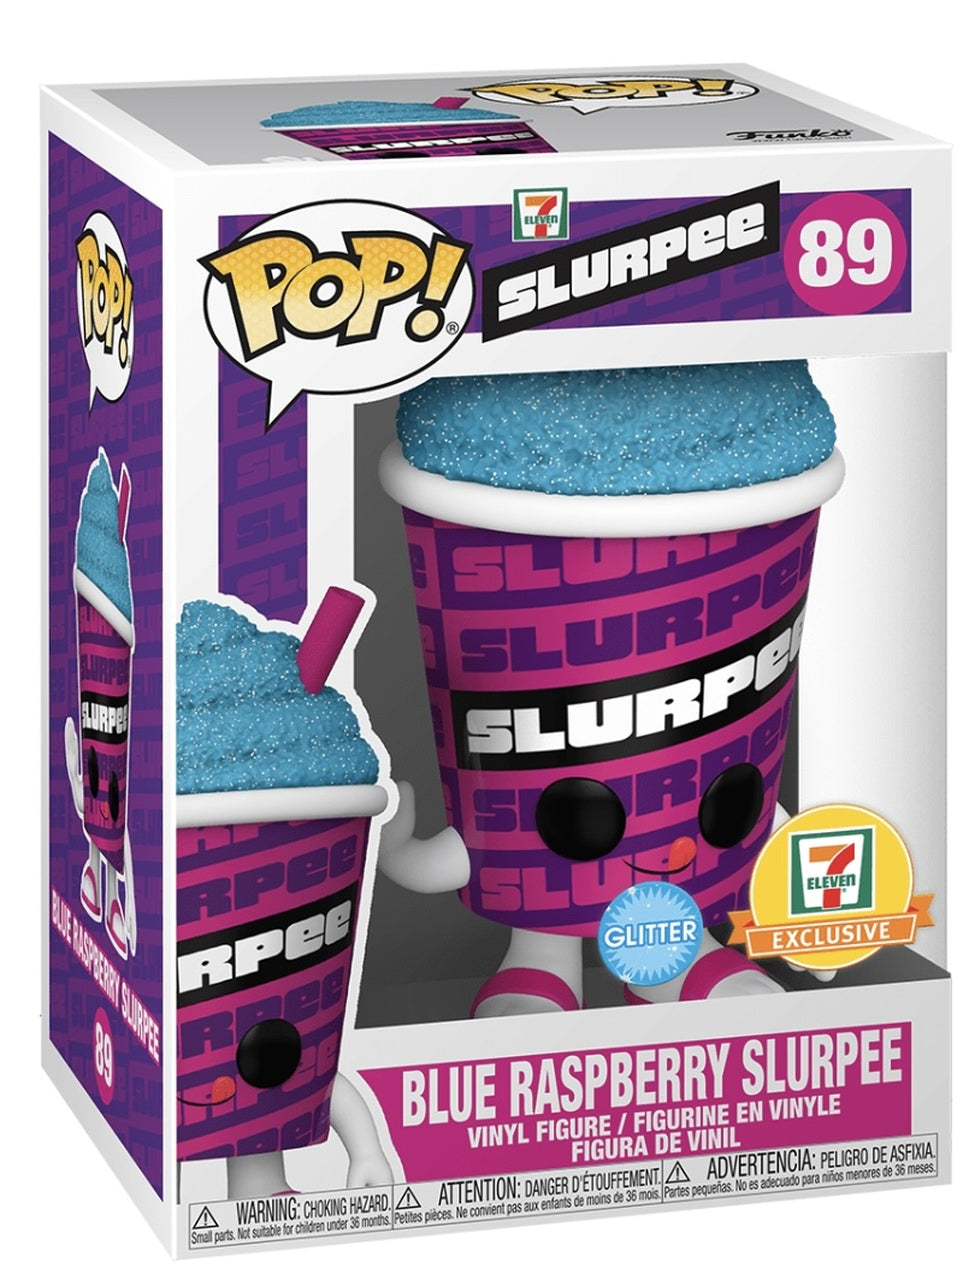 Blue Raspberry Slurpee 7 Eleven Exclusive 89 5353